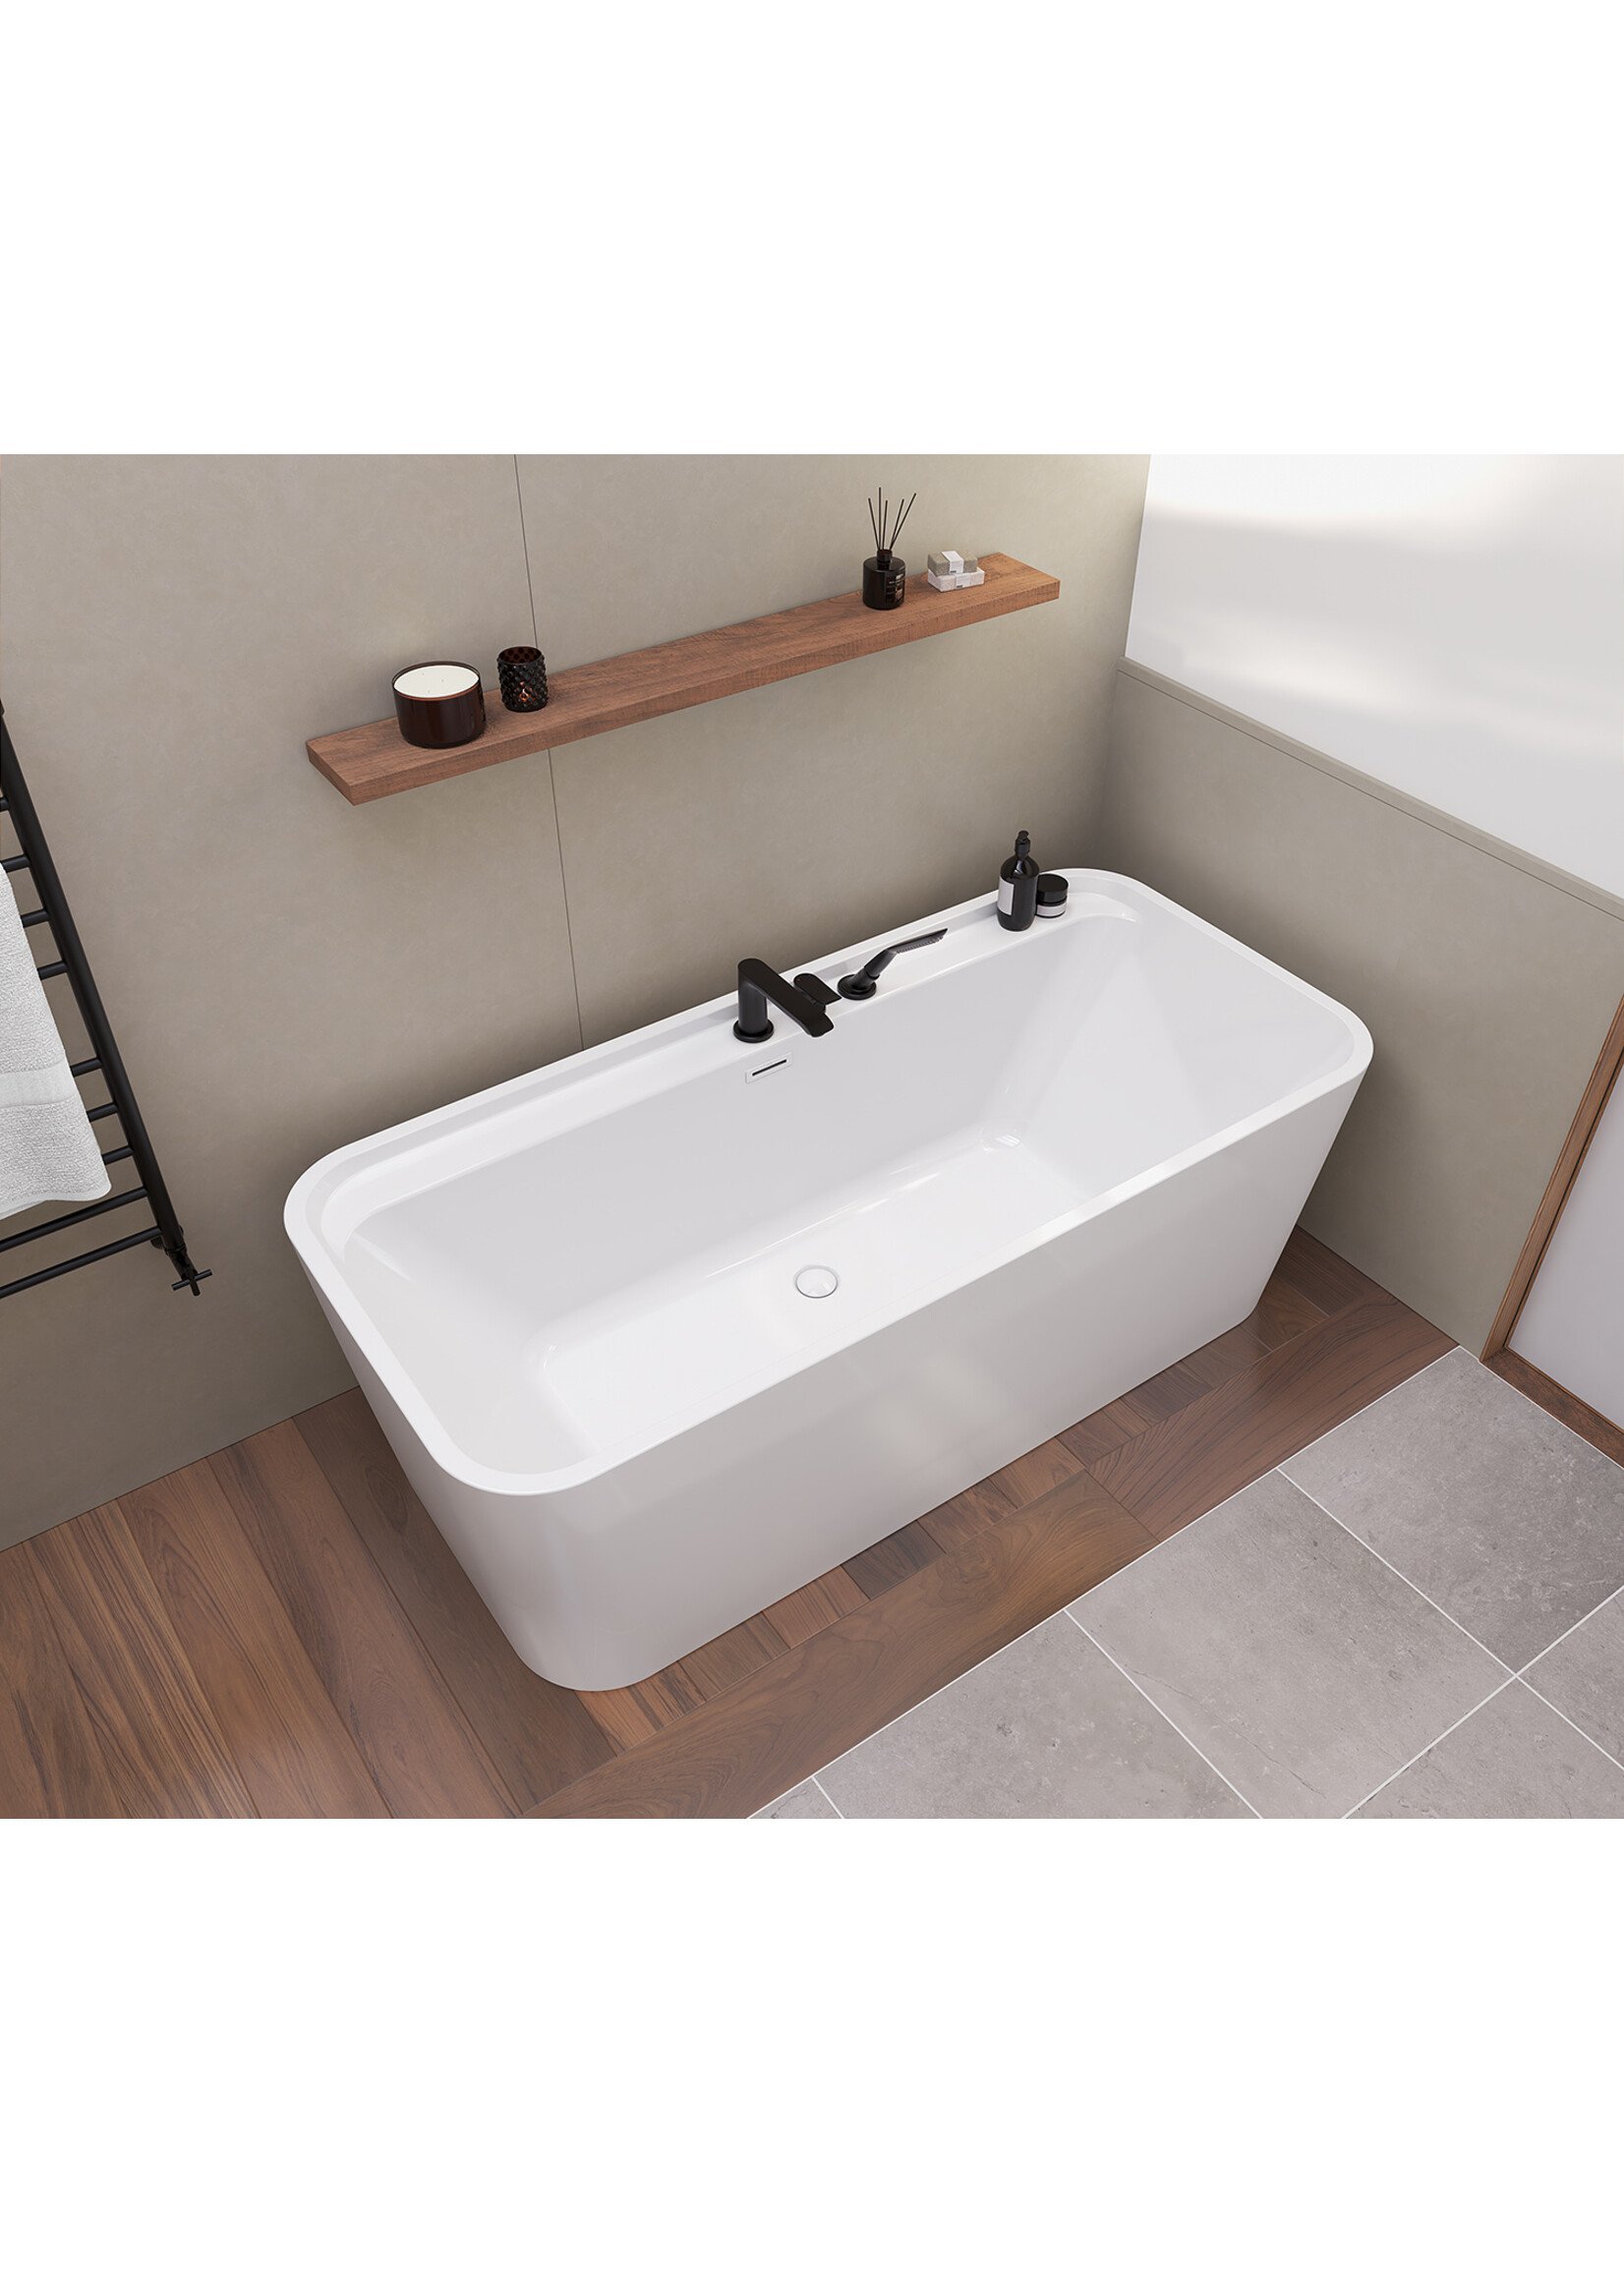 MAAX Maax Oberto  67" Freestanding Bath Tub - White